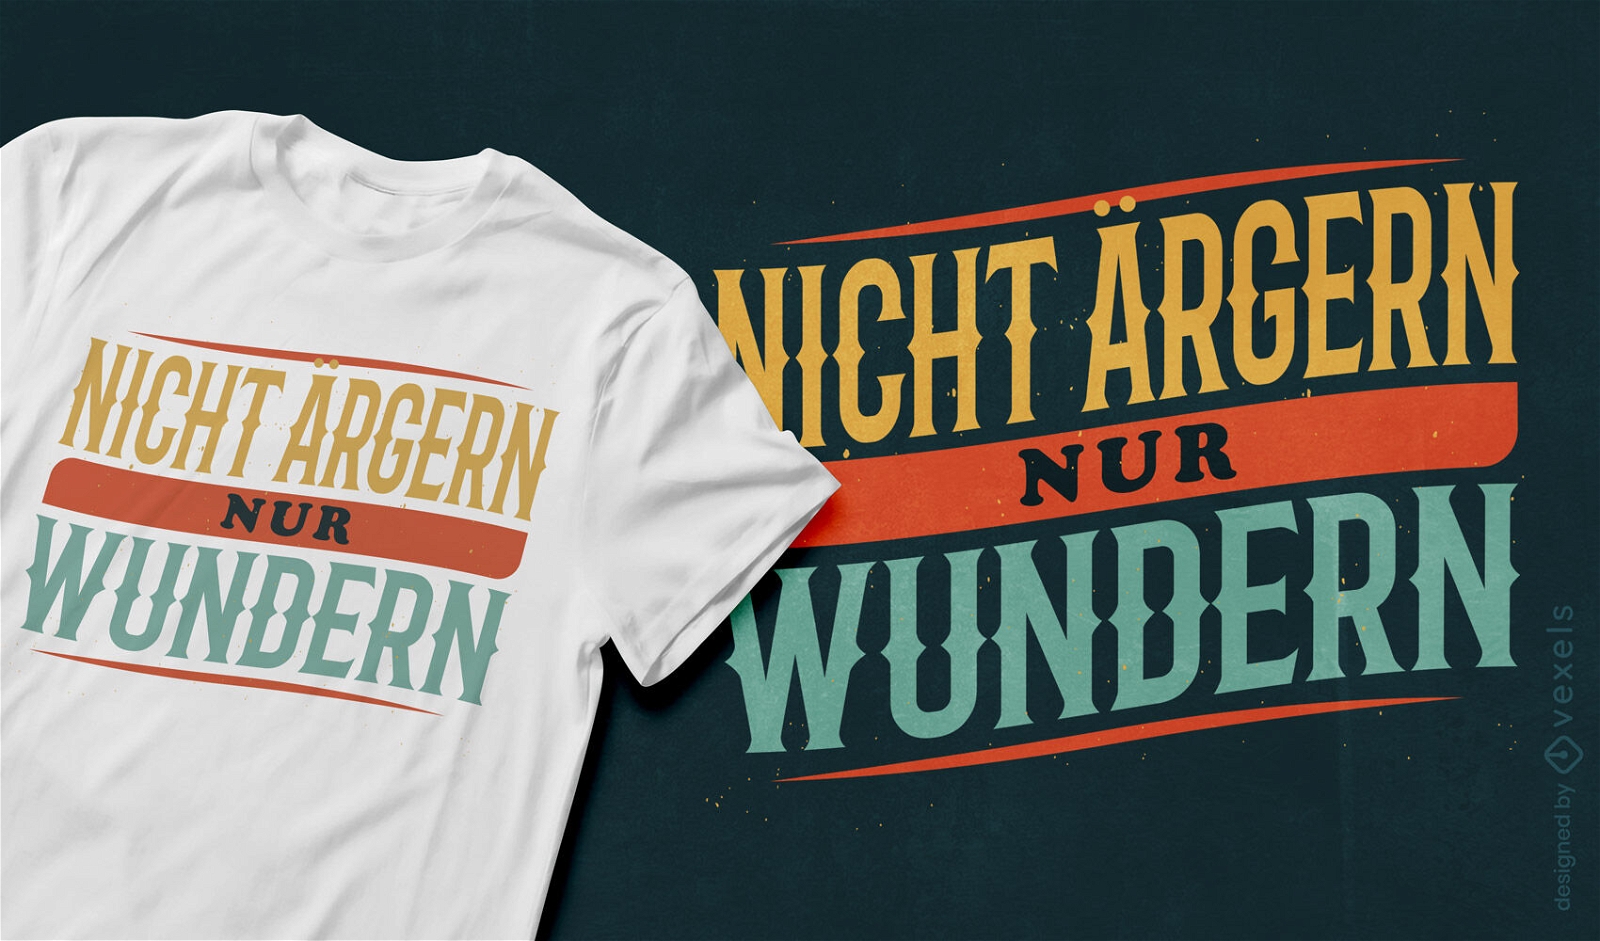 German inspirational quote vintage t-shirt design